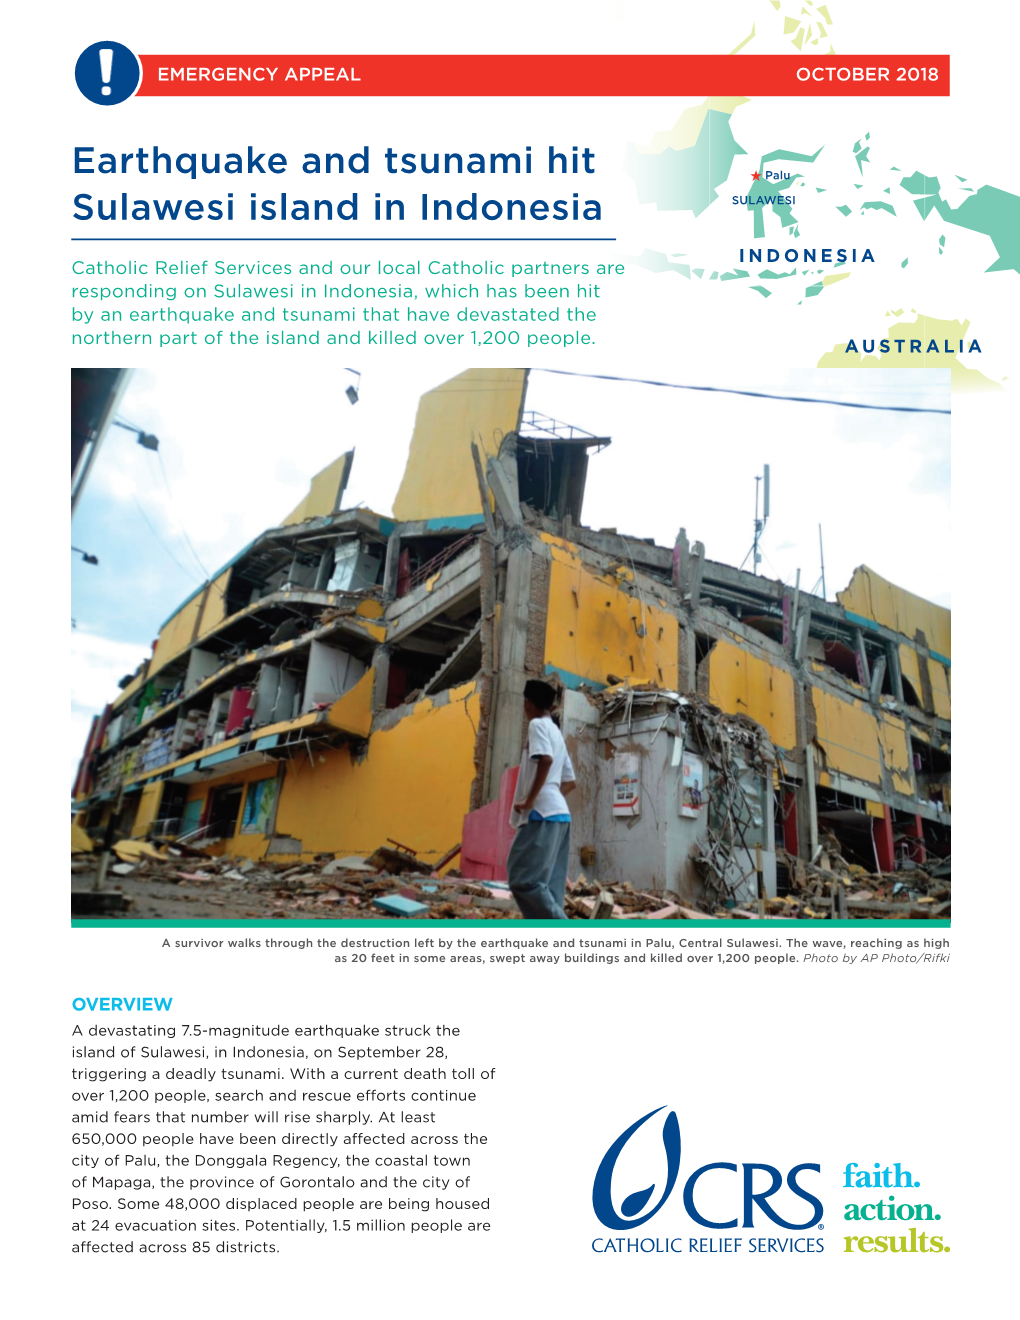 Earthquake and Tsunami Hit Sulawesi Island in Indonesia